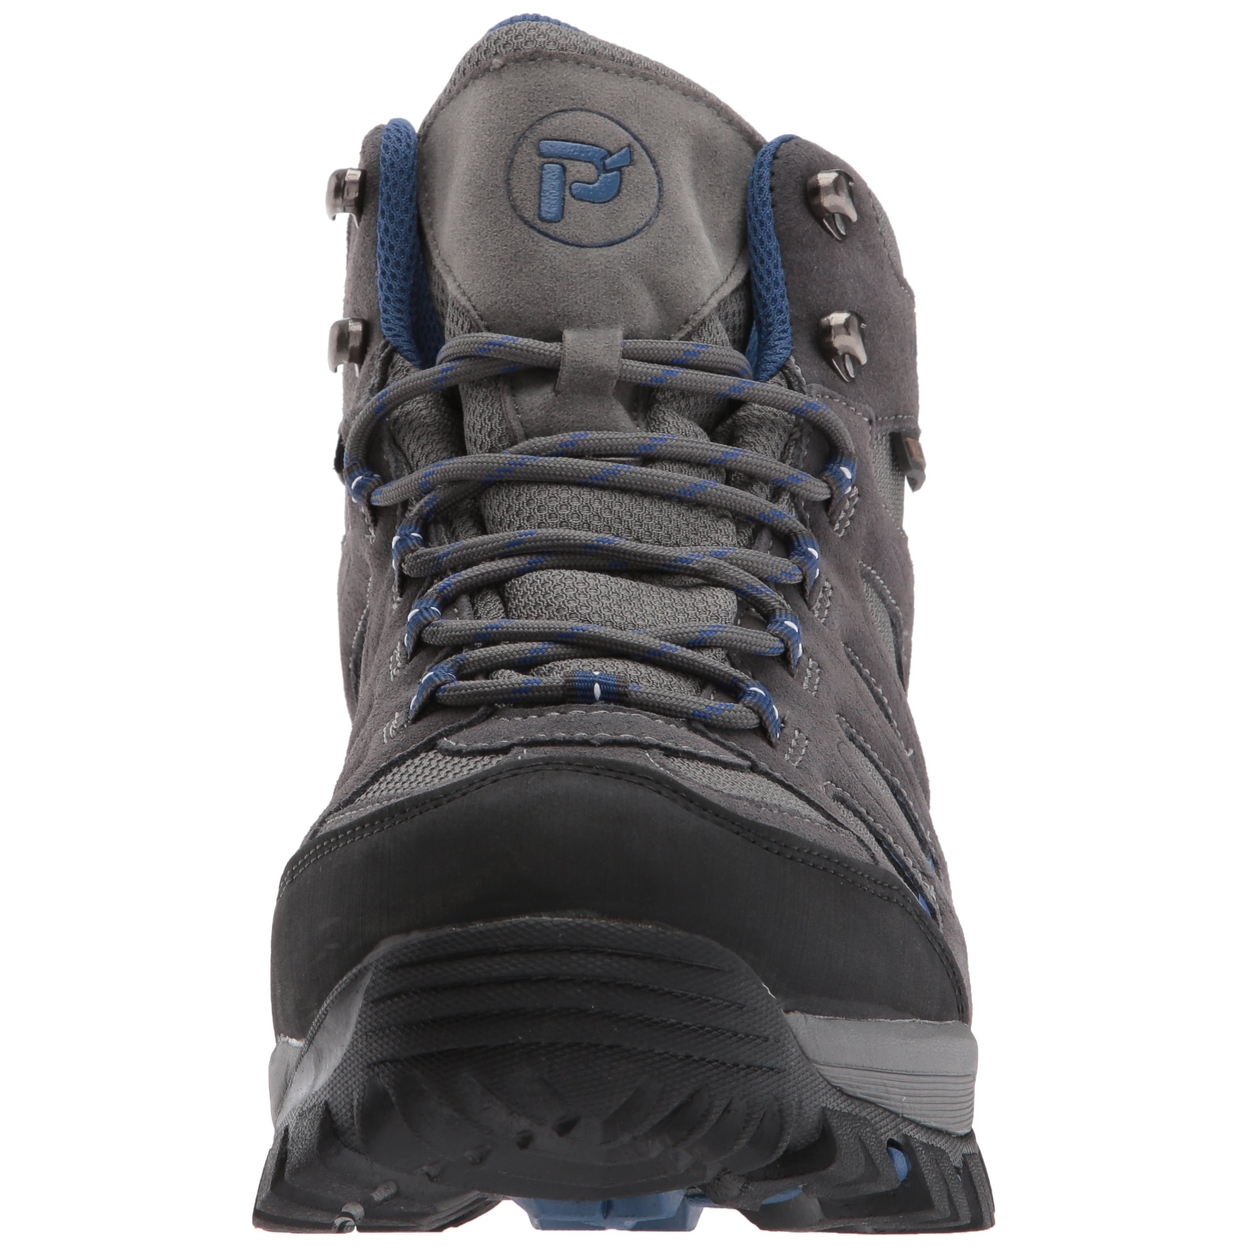 Propet Men's Ridge Walker Hiking Boot Grey/Blue - M3599GRB GREY/BLUE - GREY/BLUE, 10-2E